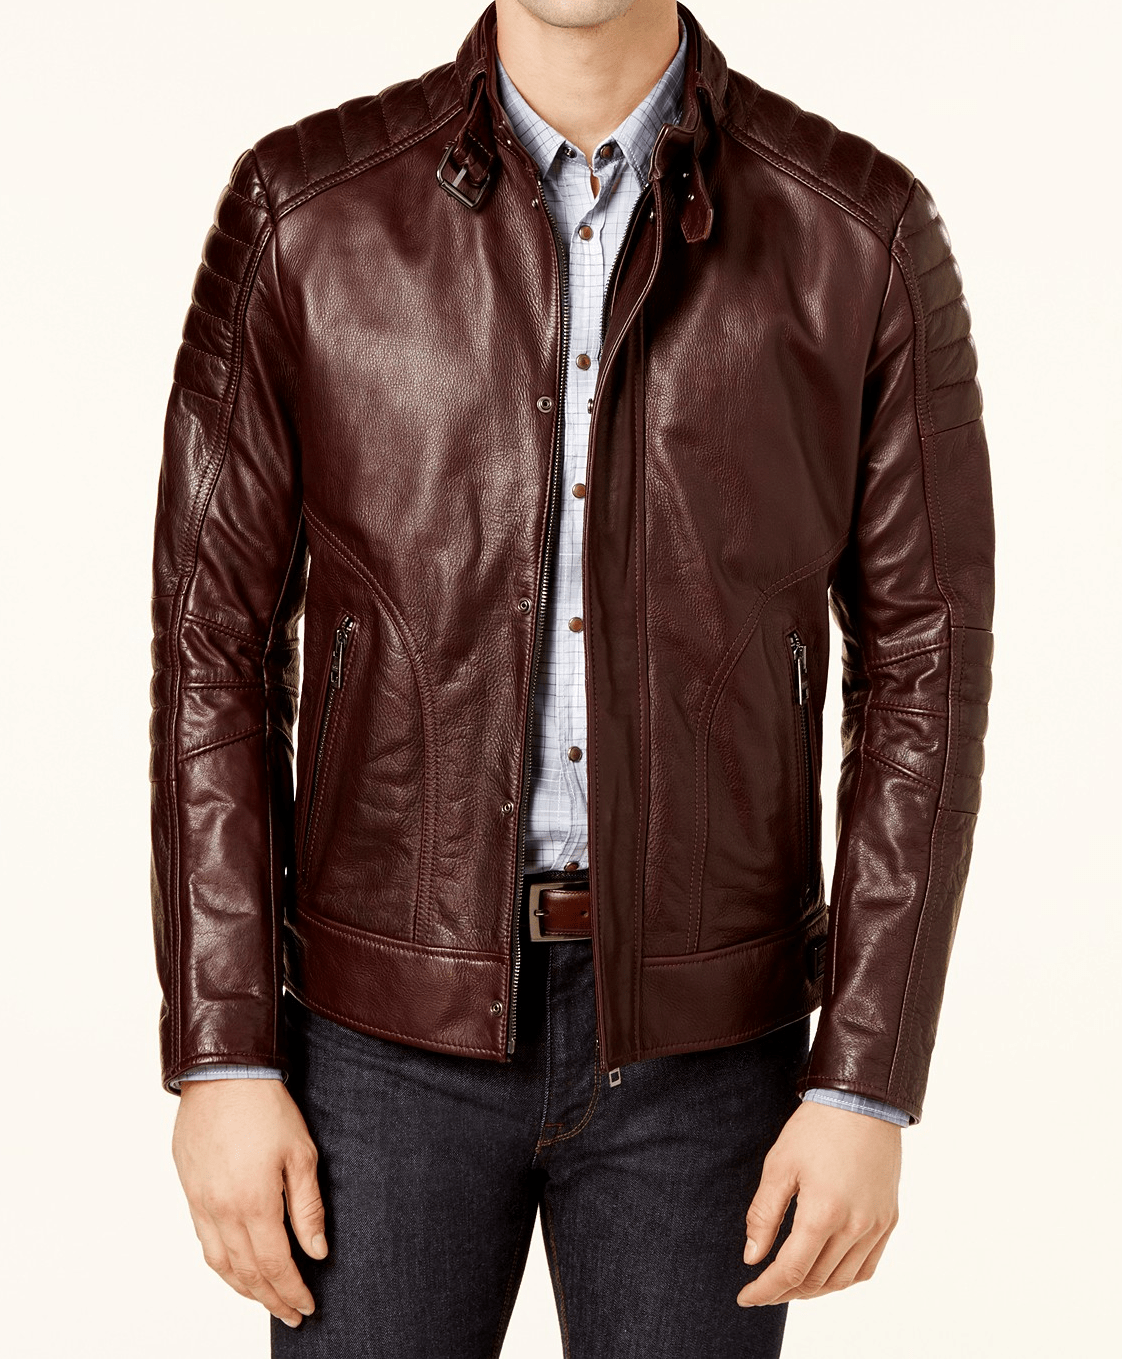 Hugo Boss Jacket Leather | estudioespositoymiguel.com.ar